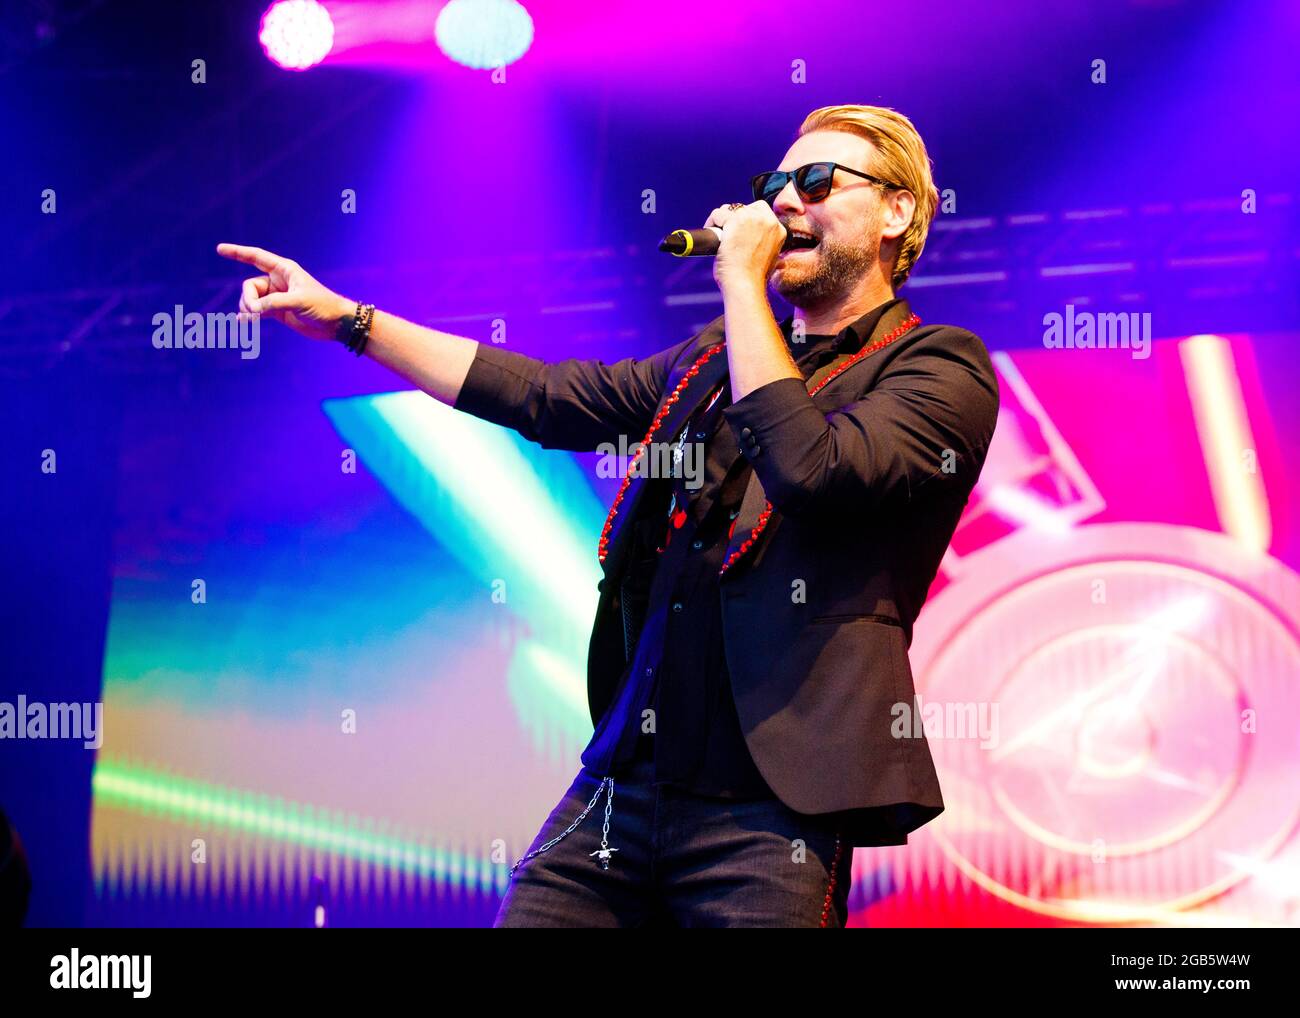 Boyzlife, Fantasia Festival, Maldon, Essex © Clarissa Debenham / Alamy Stock Photo